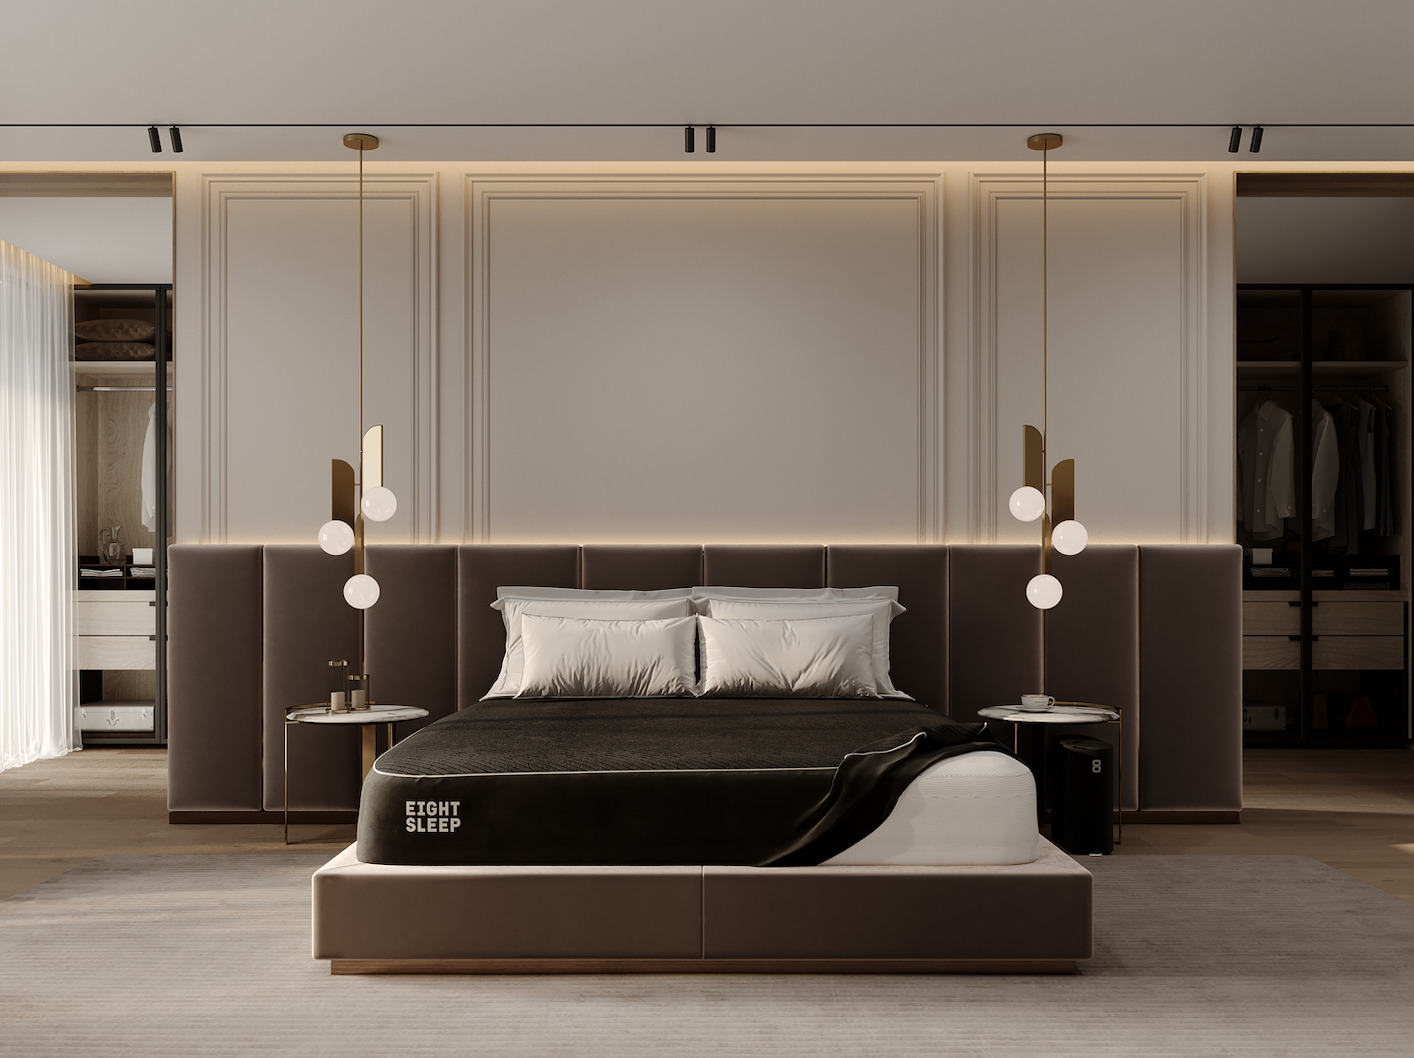 A bedroom optimized for sleep